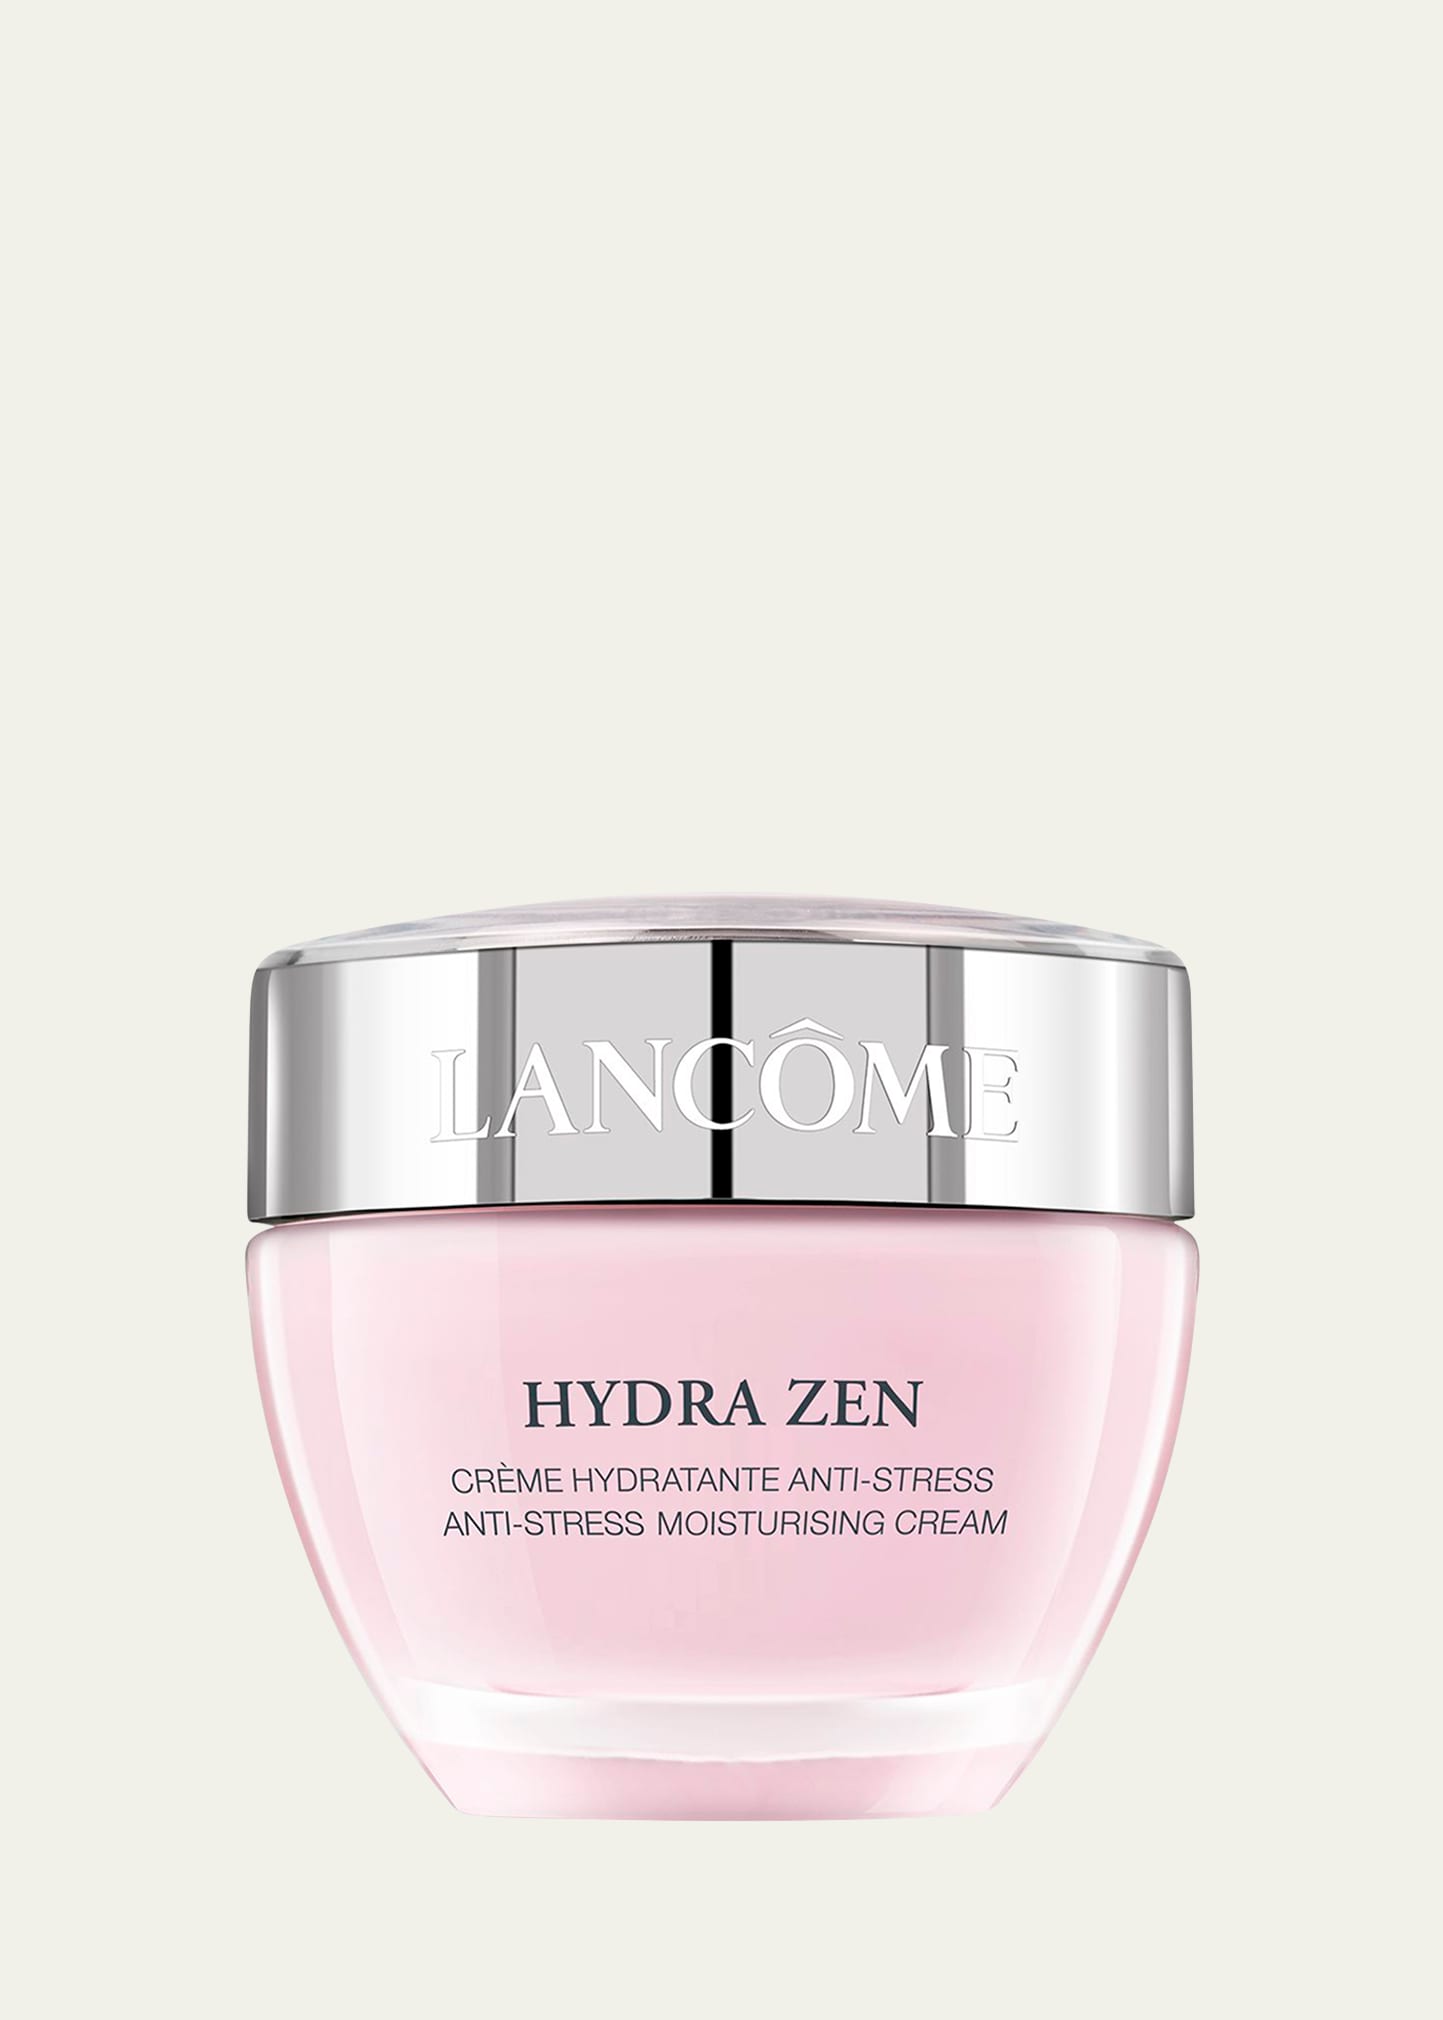 Hydra Zen Anti-Stress Moisturizing Face Cream, 1.7 oz.